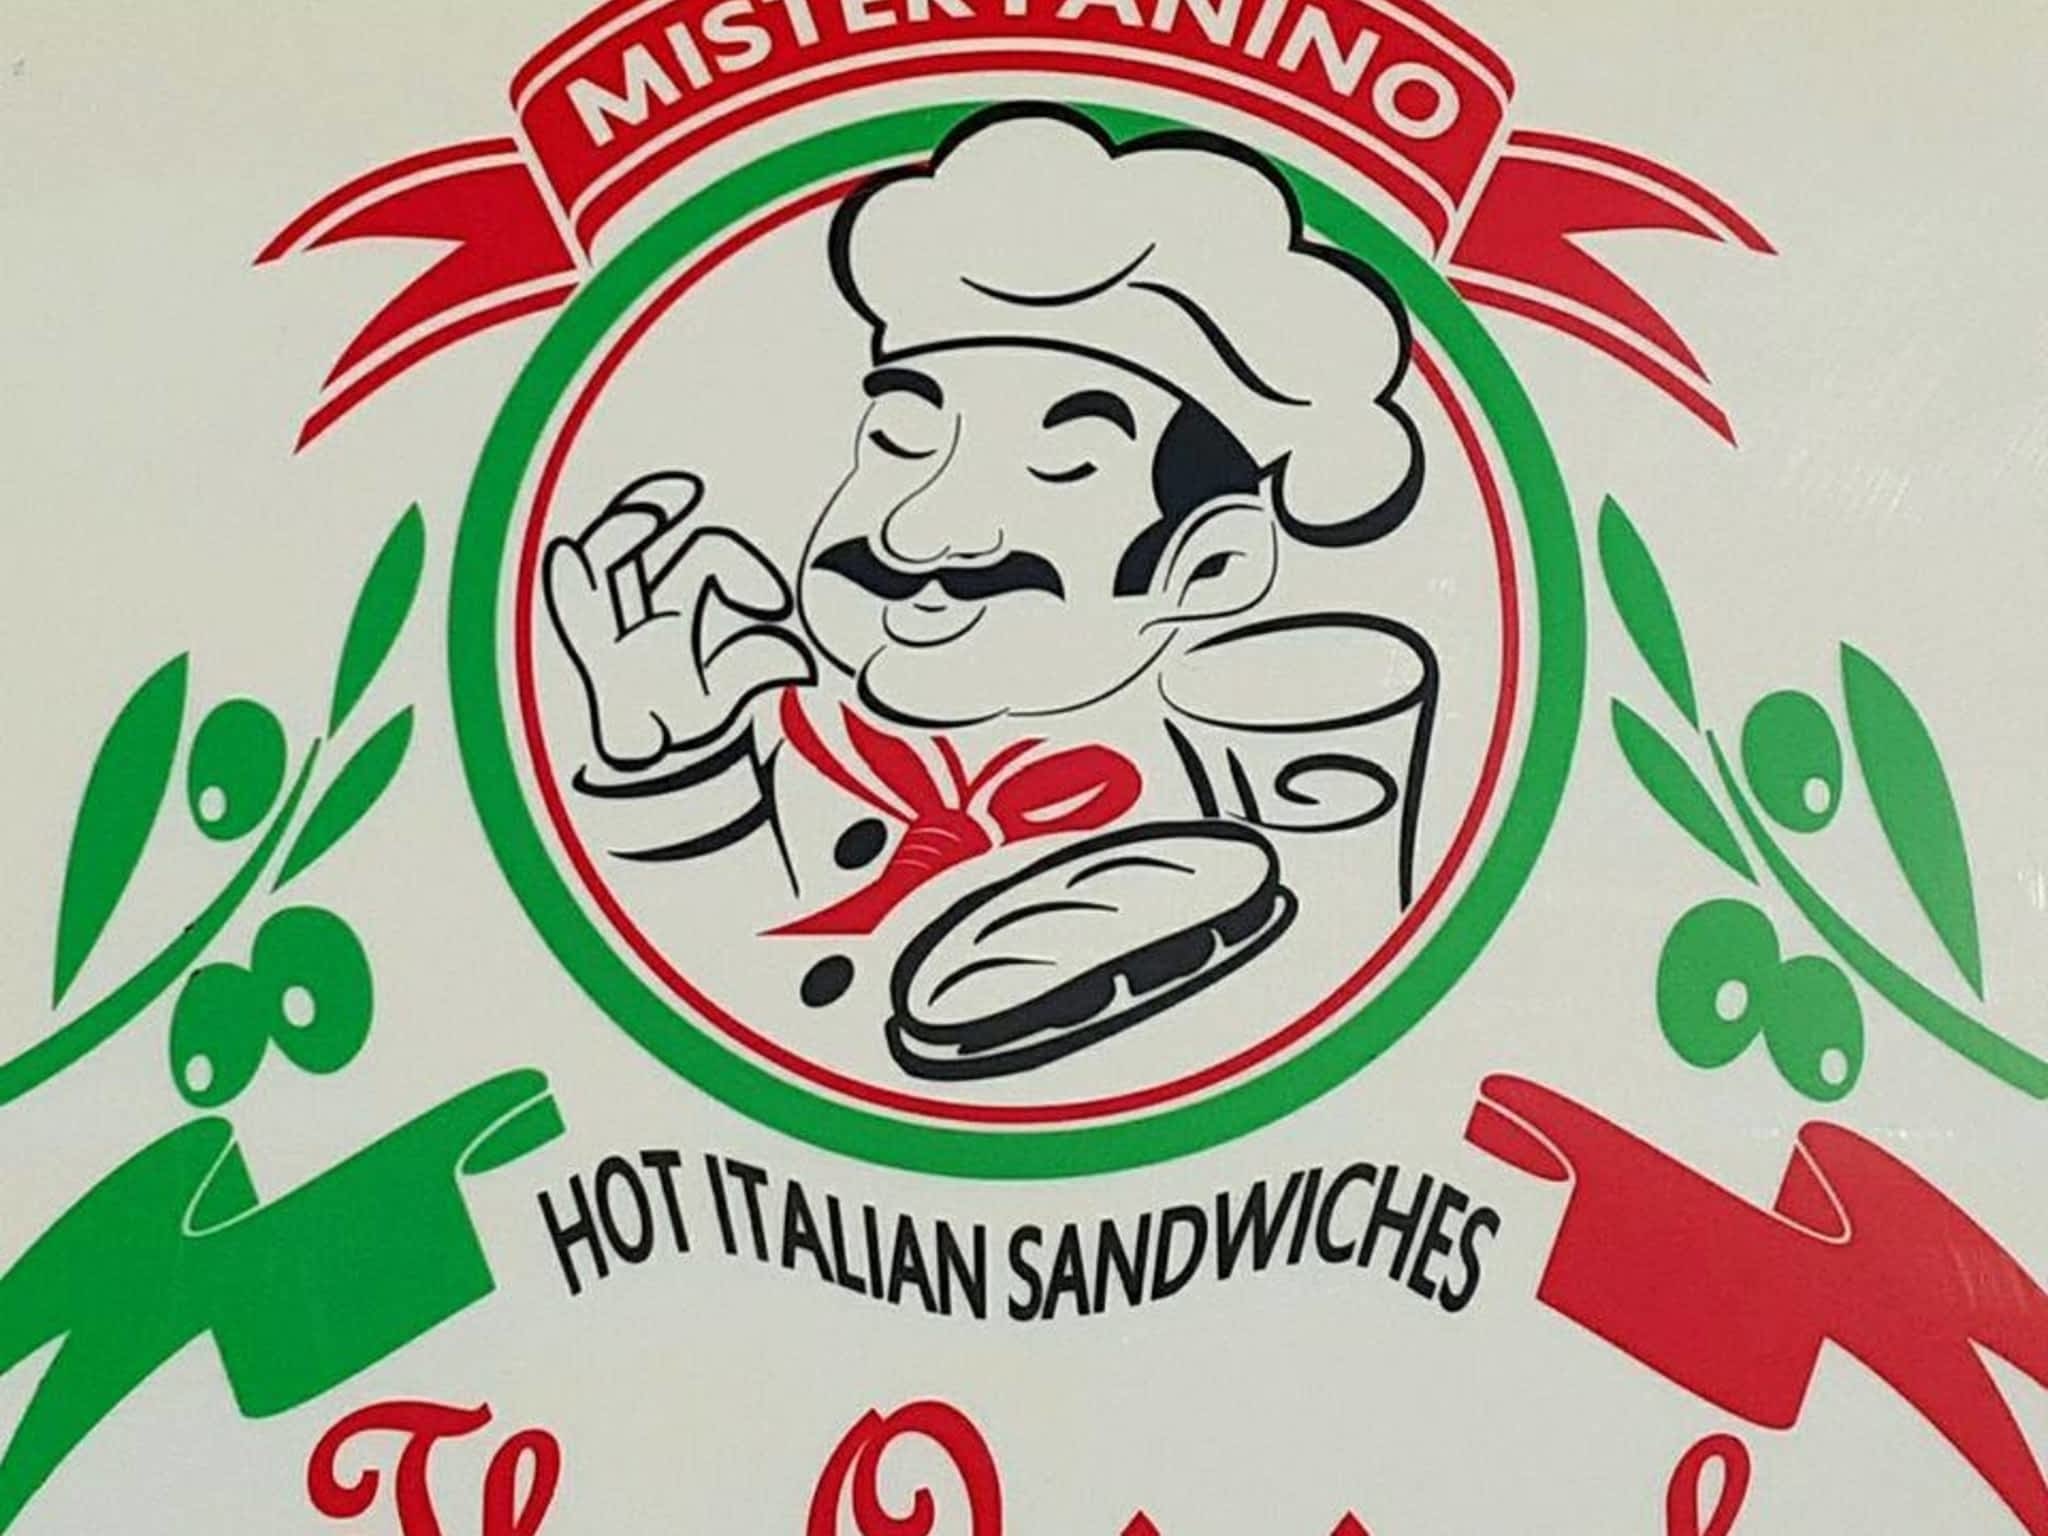 photo Mister Panino Hot Italian Sandwiches